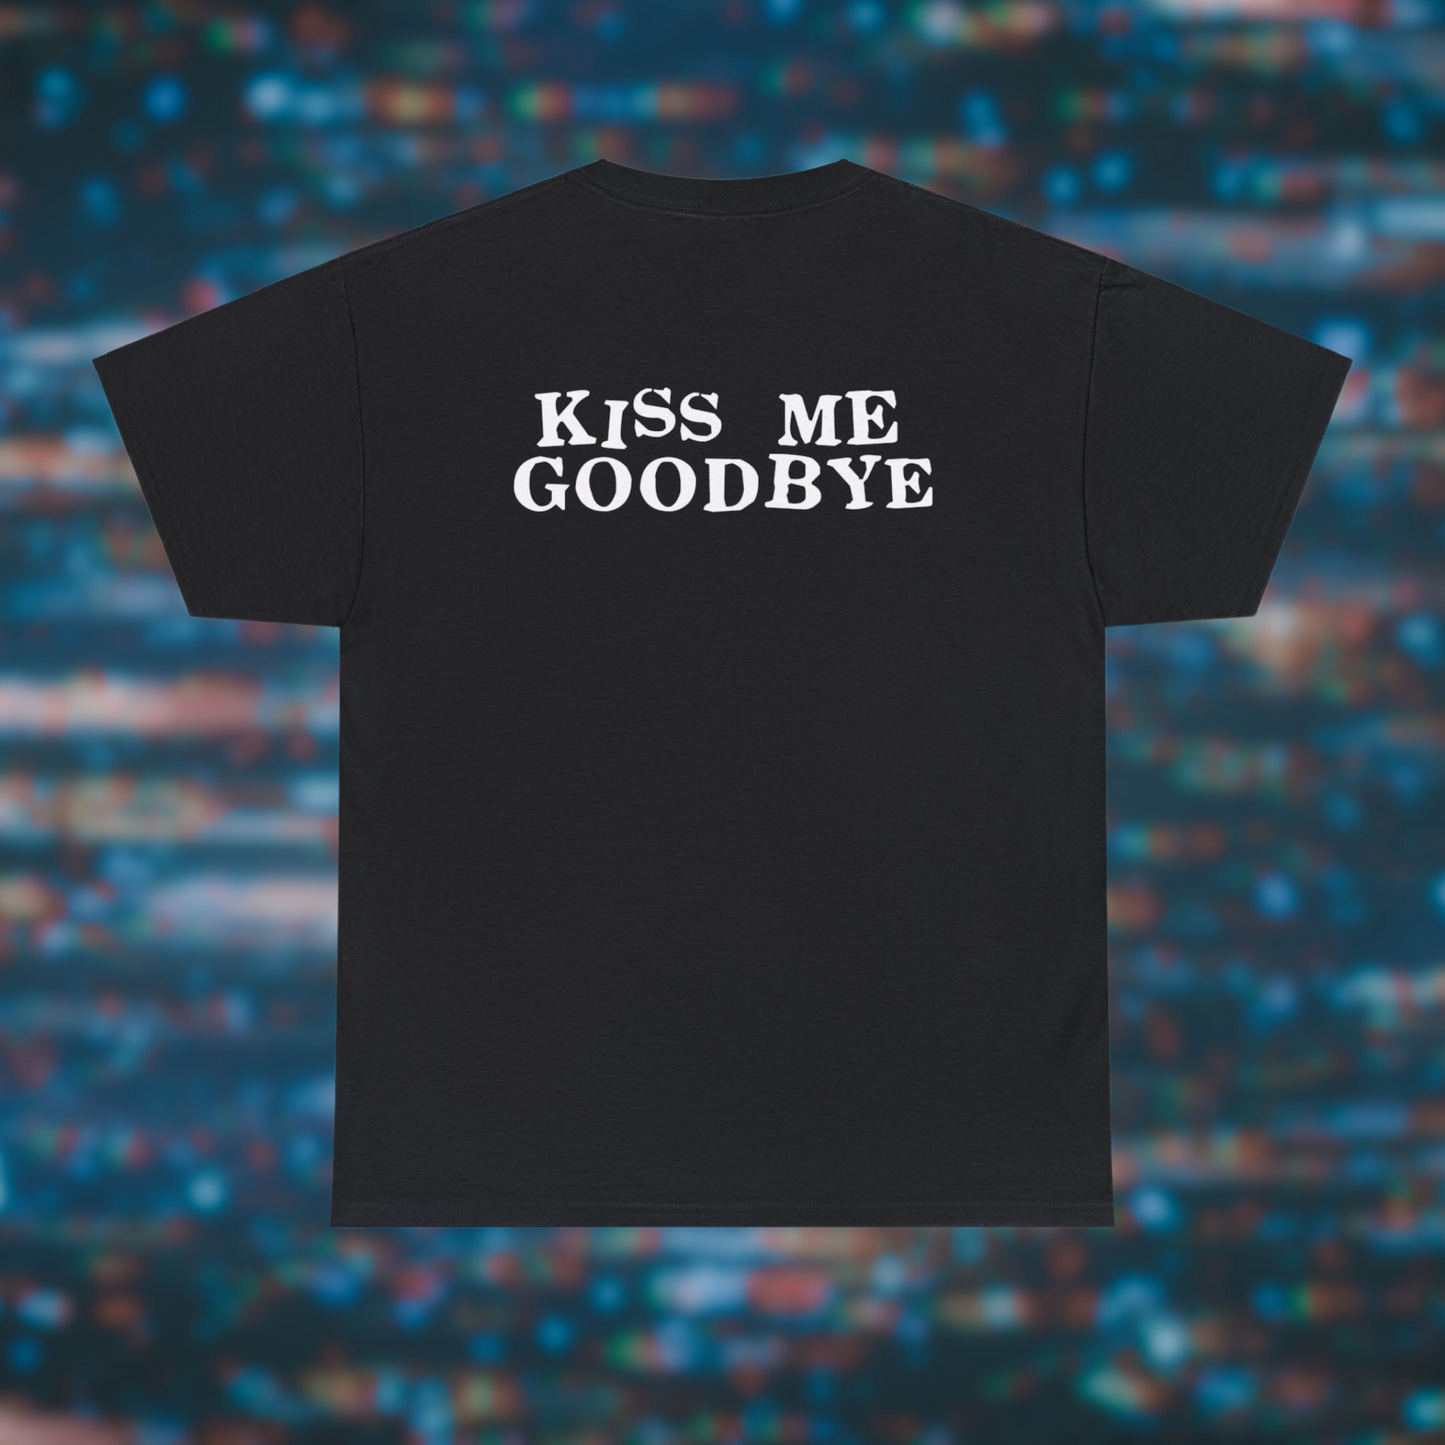 You Wish - Kiss Me Goodbye Tee